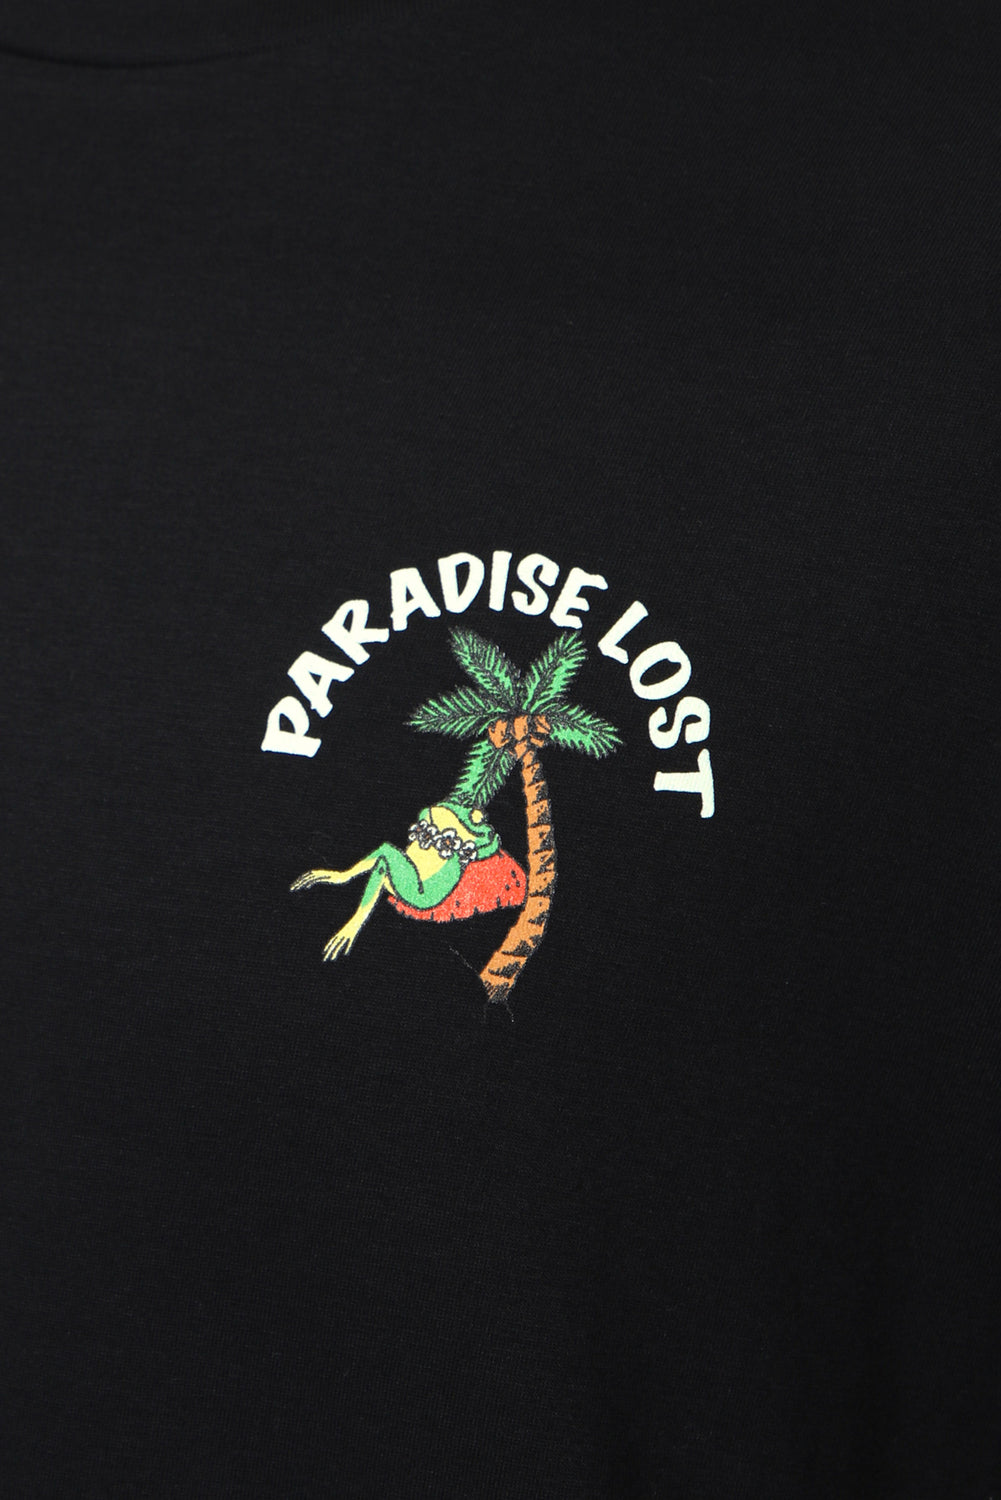 Arsenic Mens Paradise Lost T-Shirt Arsenic Mens Paradise Lost T-Shirt